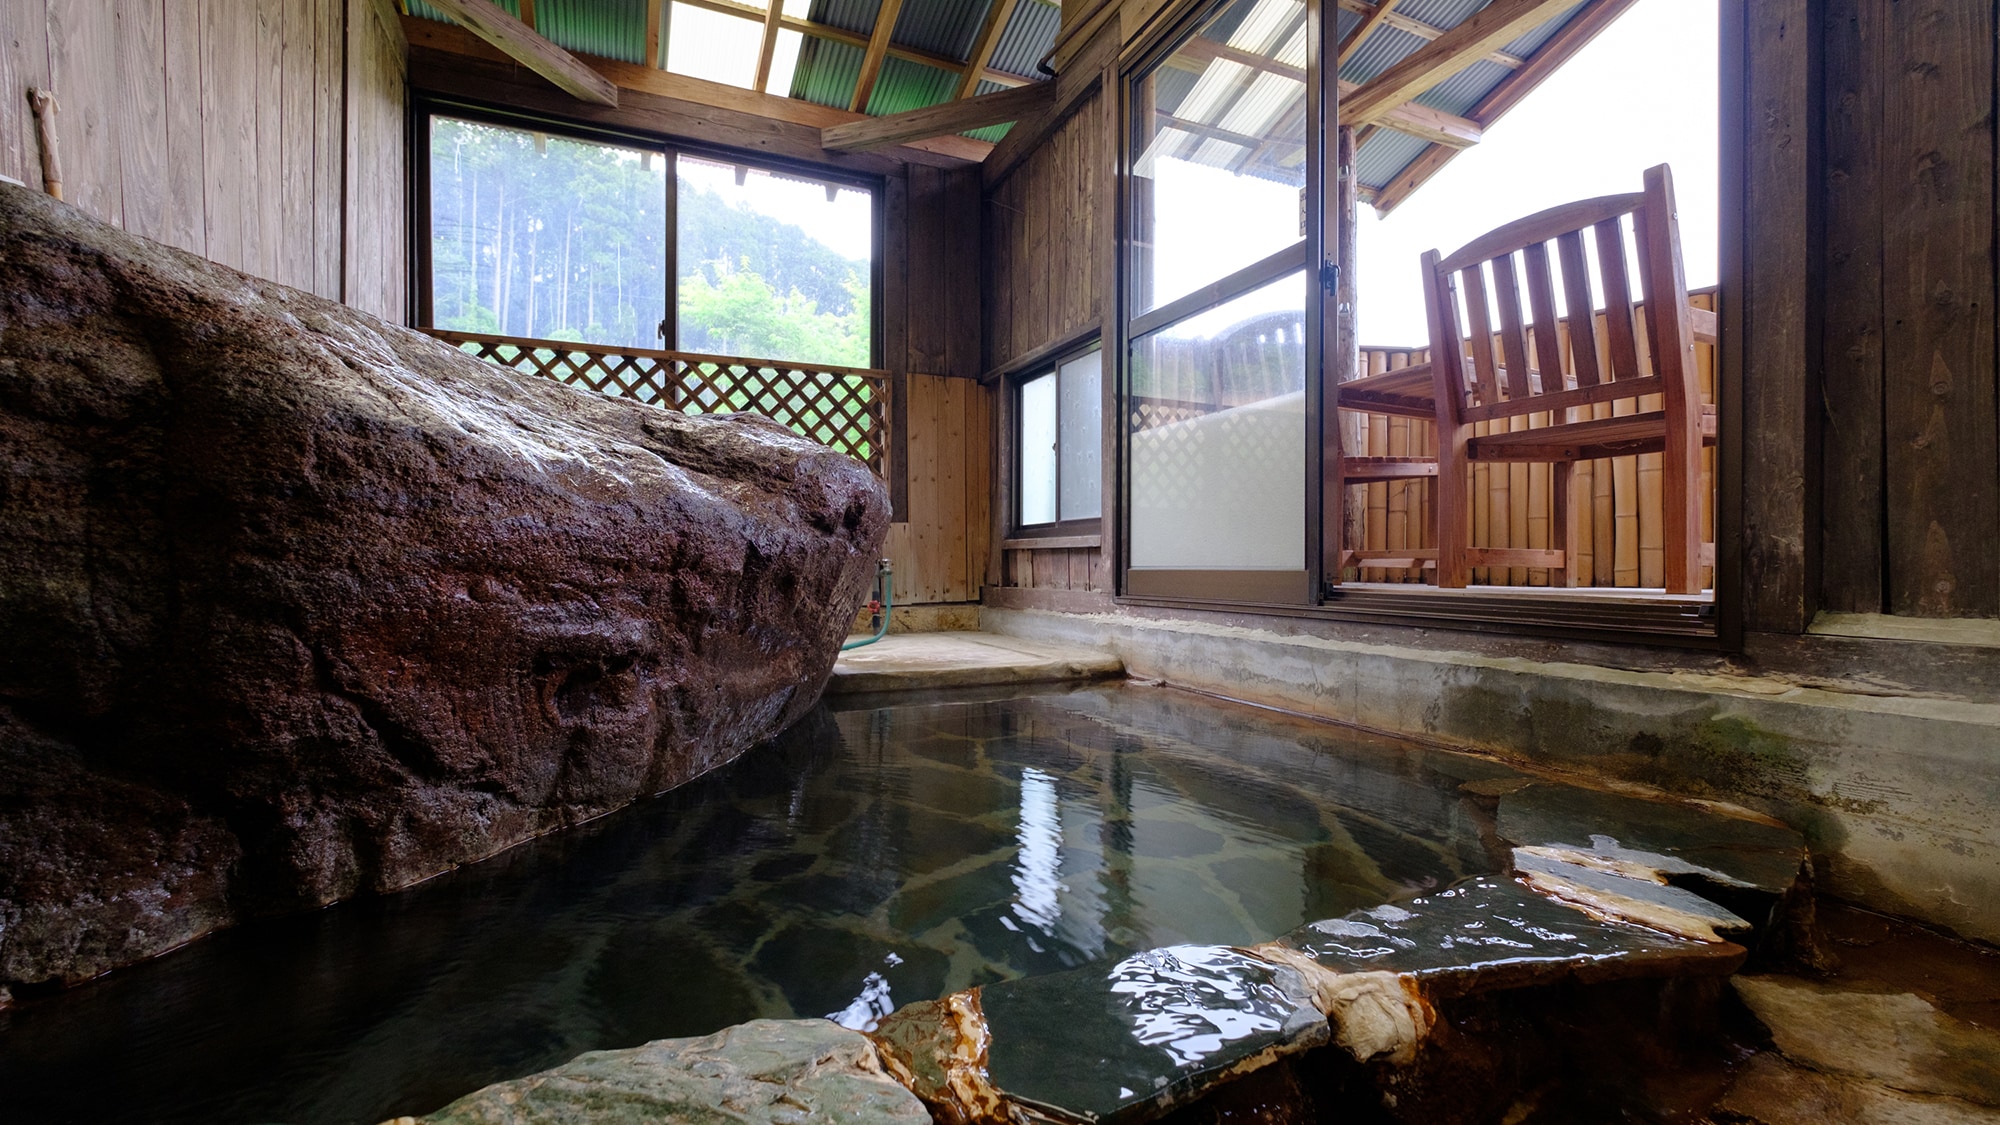 Private semi-open-air bath, rock bath